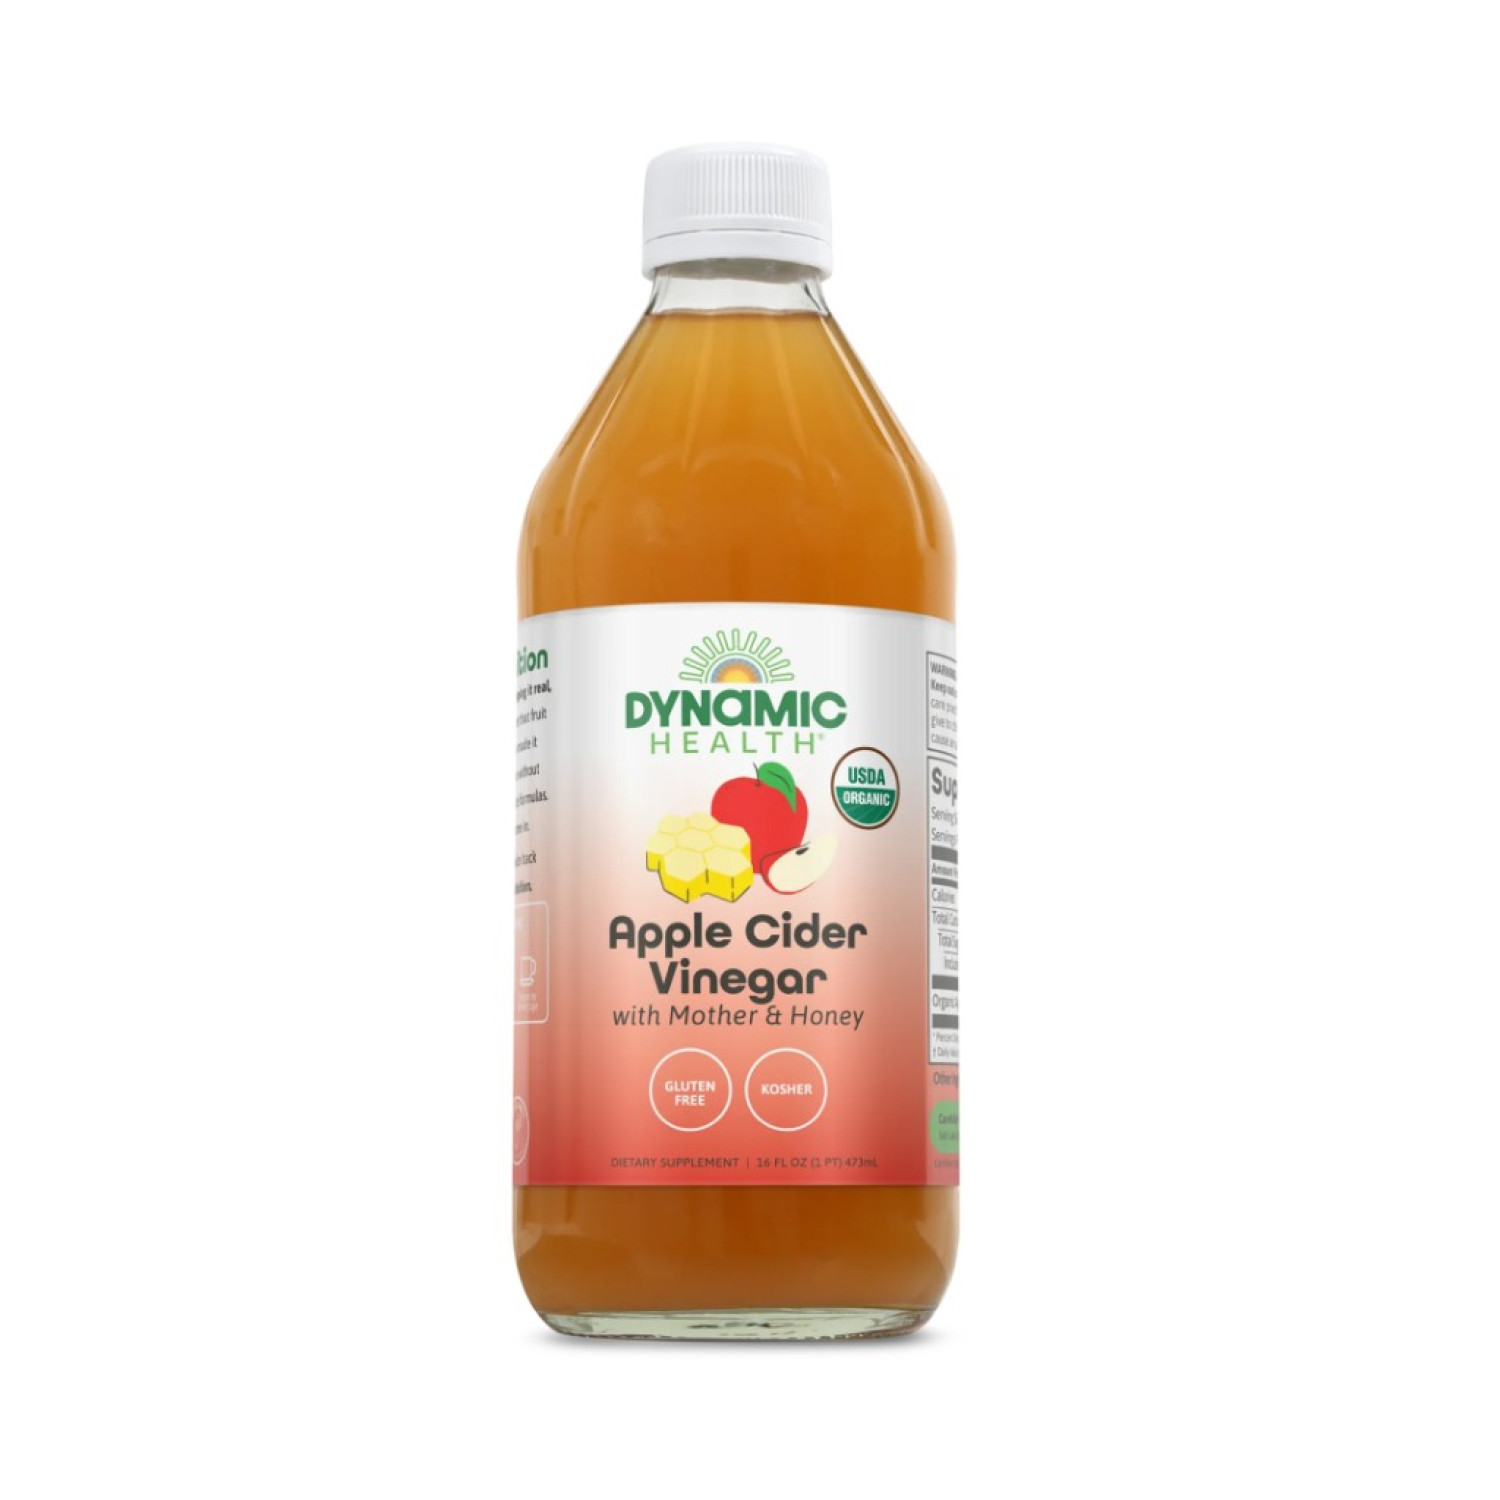 dynamic-health-apple-cider-vinegar-473-ml-654de4fbd3a02.jpeg